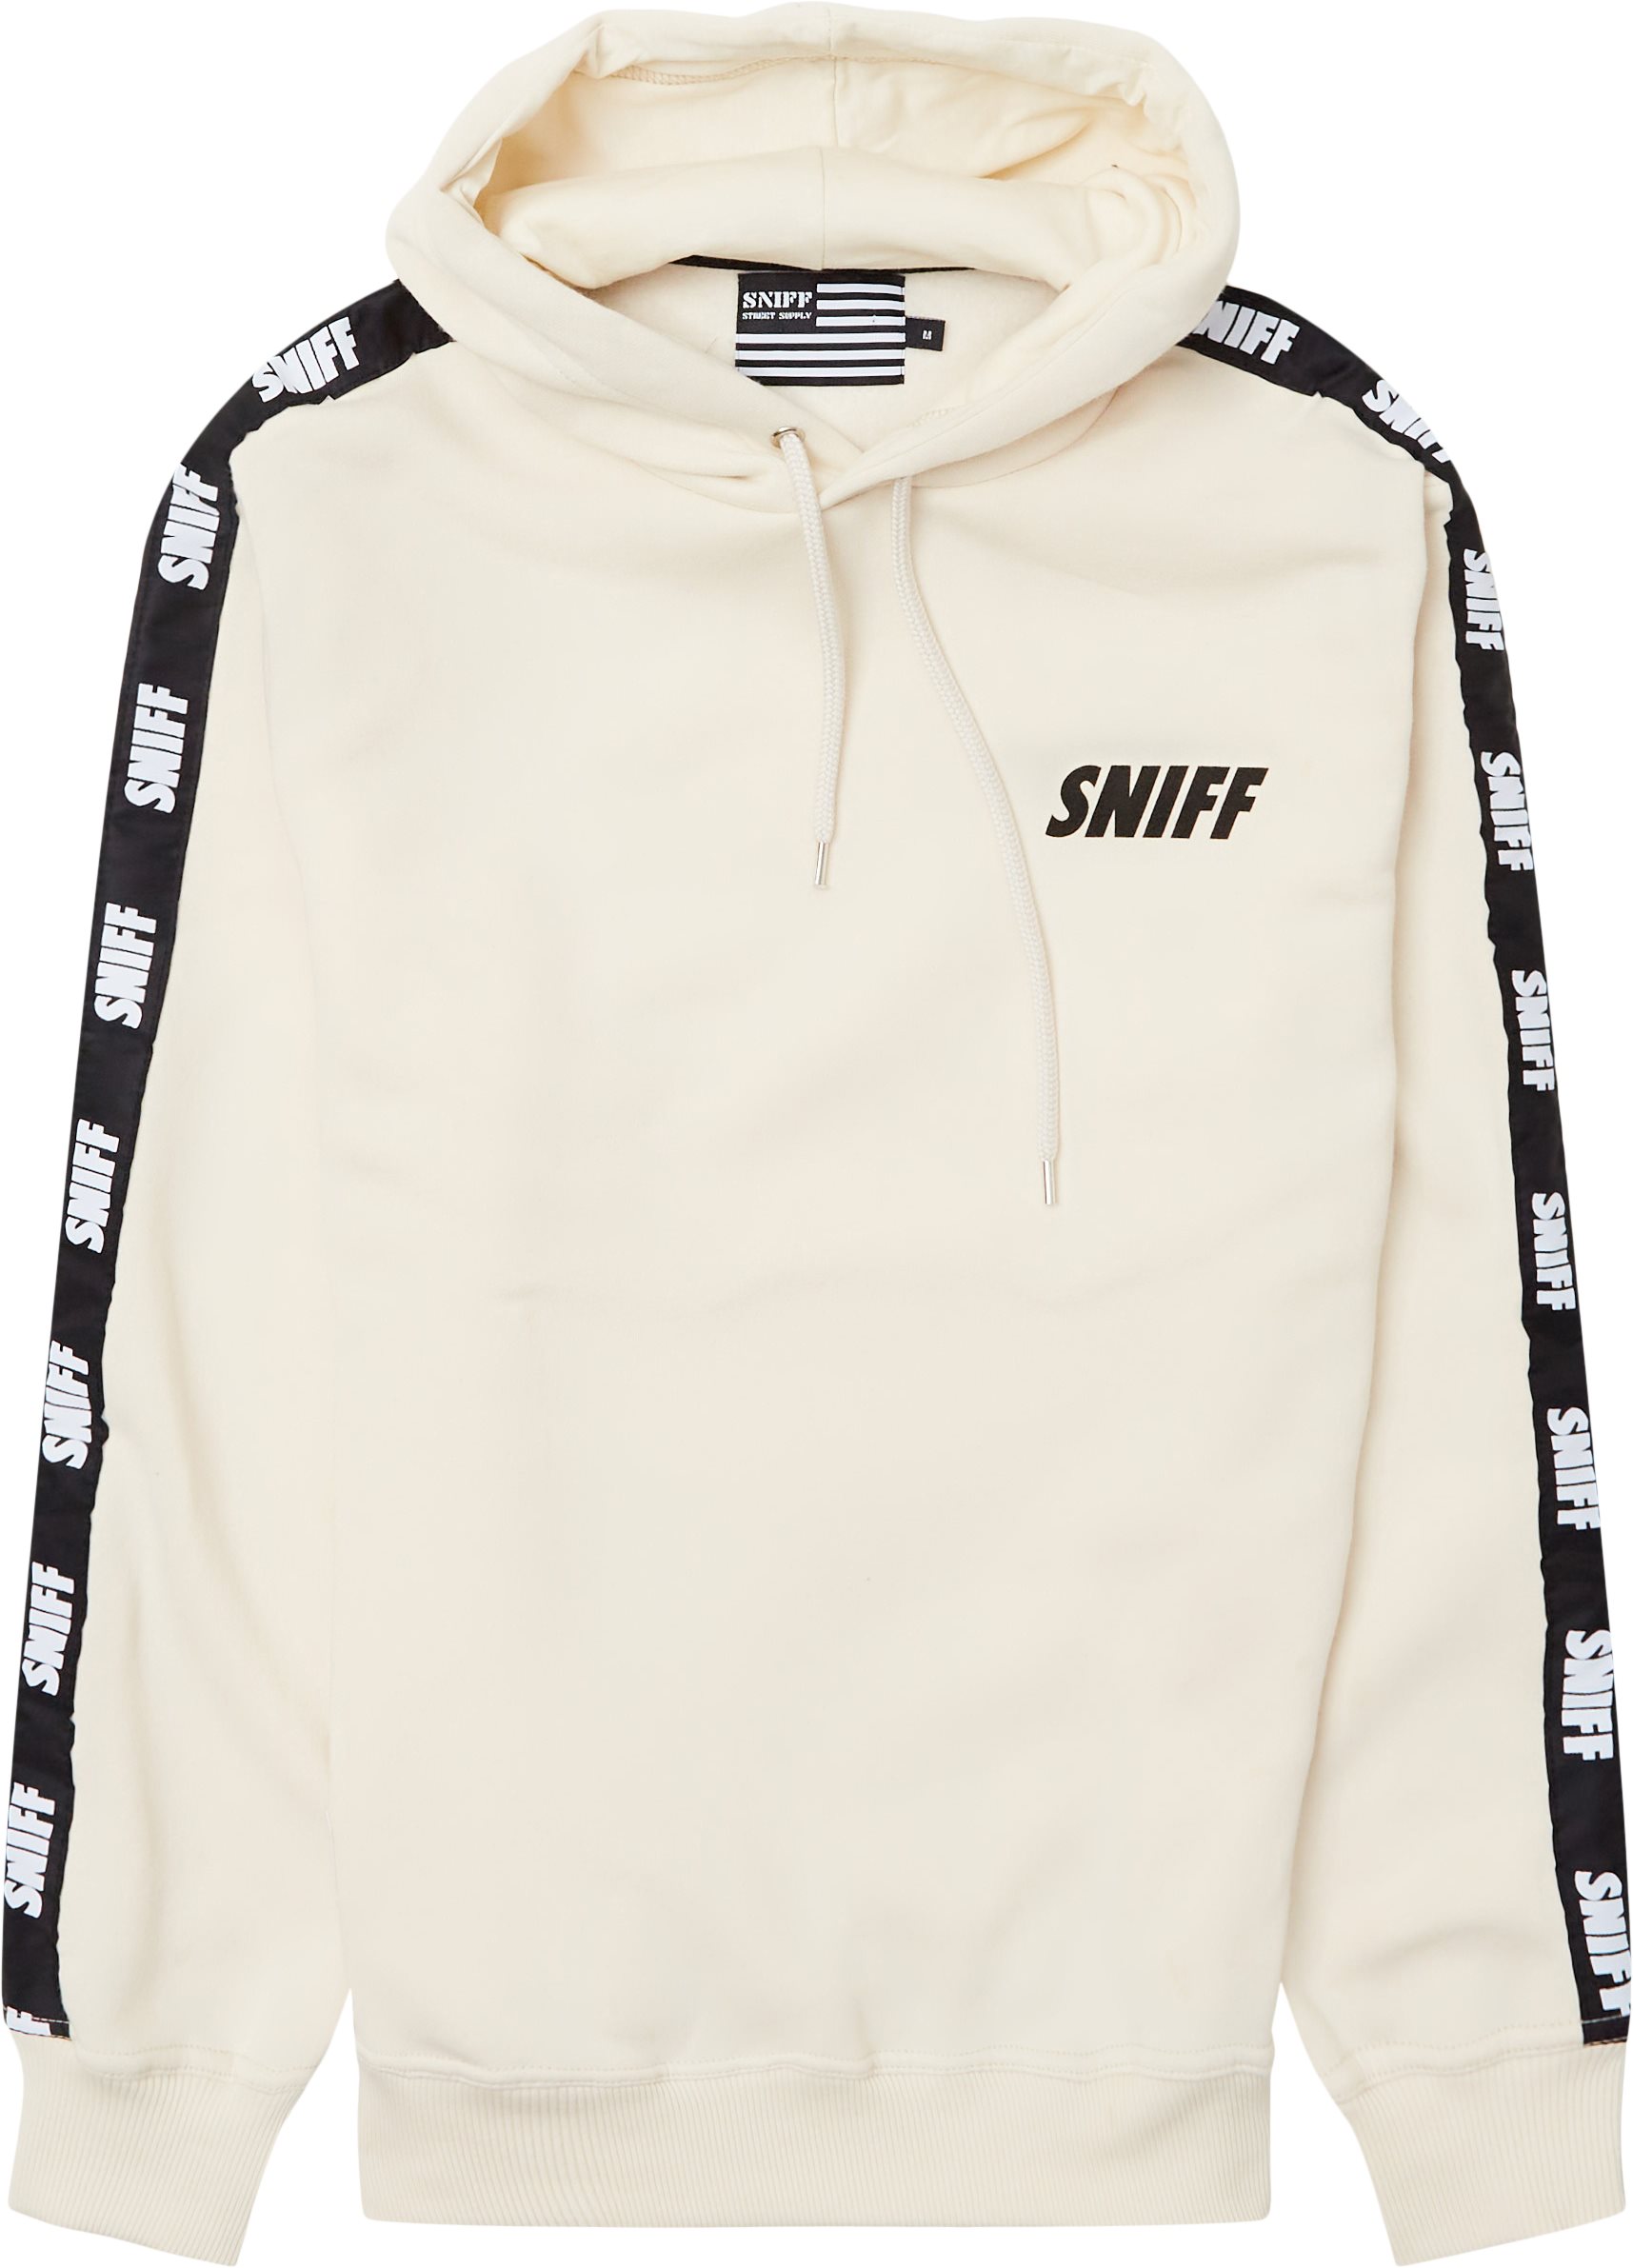 CRANDON Sweatshirts from Sniff 13